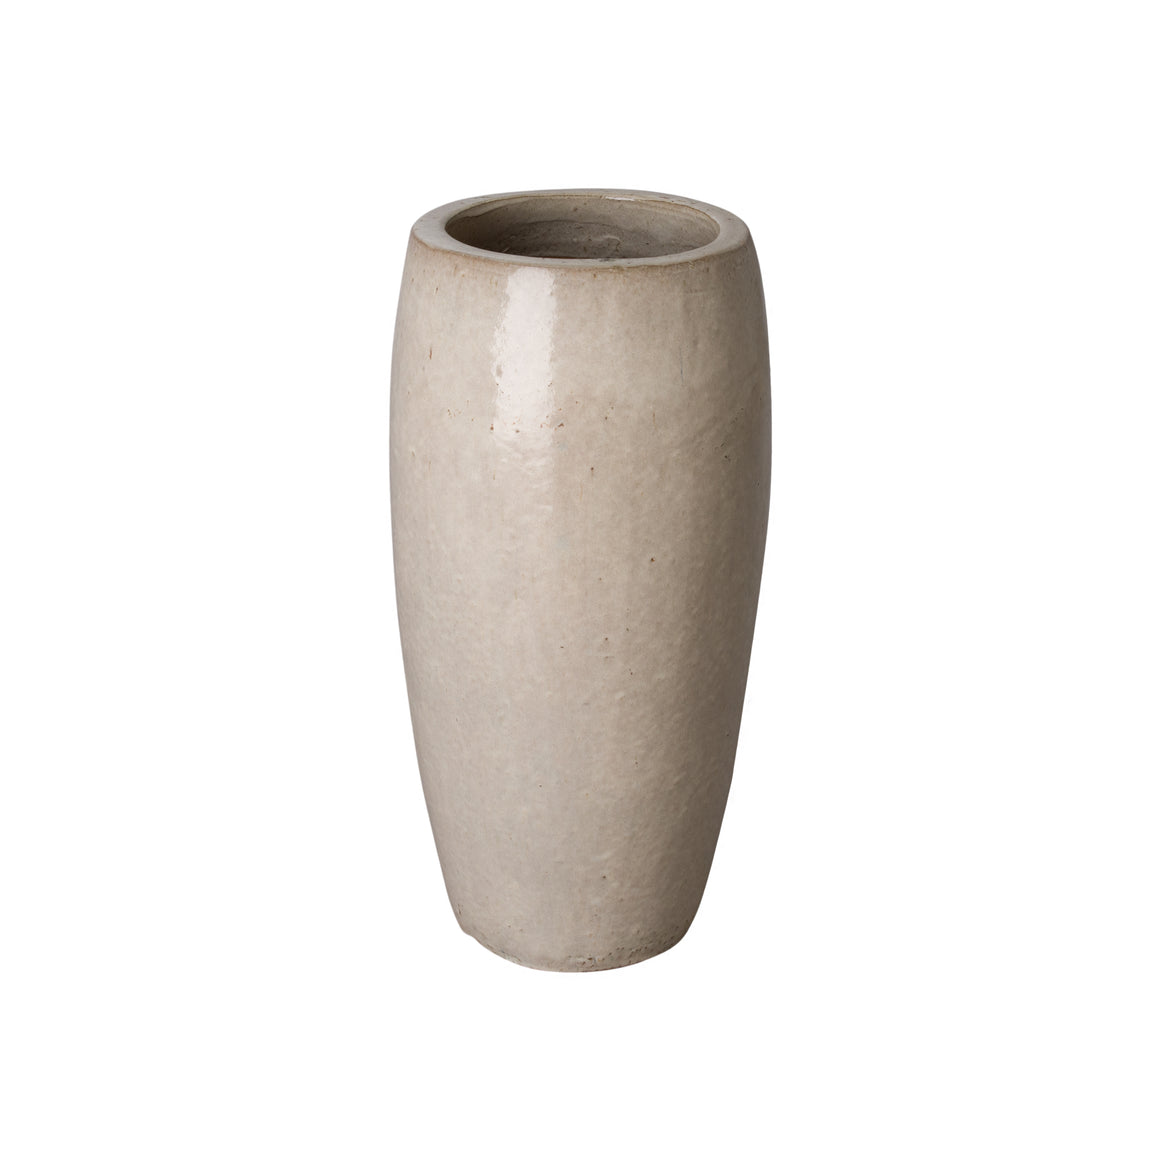 Small Ceramic Jar with a Distressed White Glaze